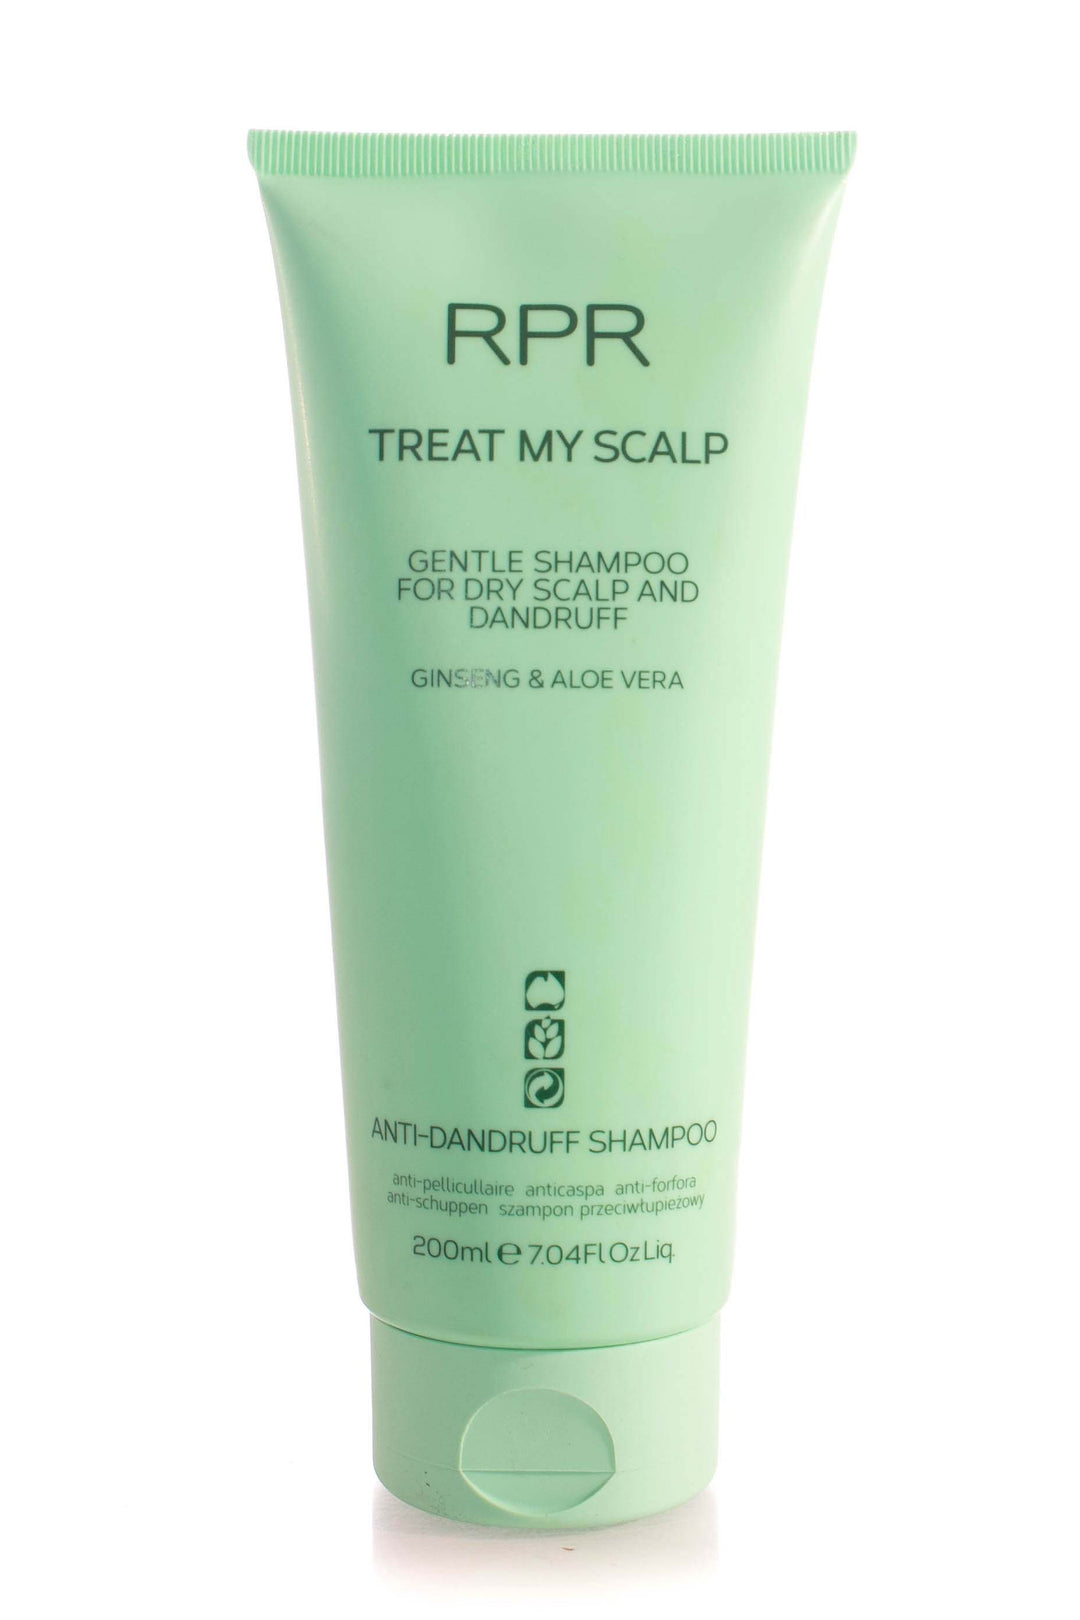 rpr-treat-my-scalp-anti-dandruff-shampoo-200ml